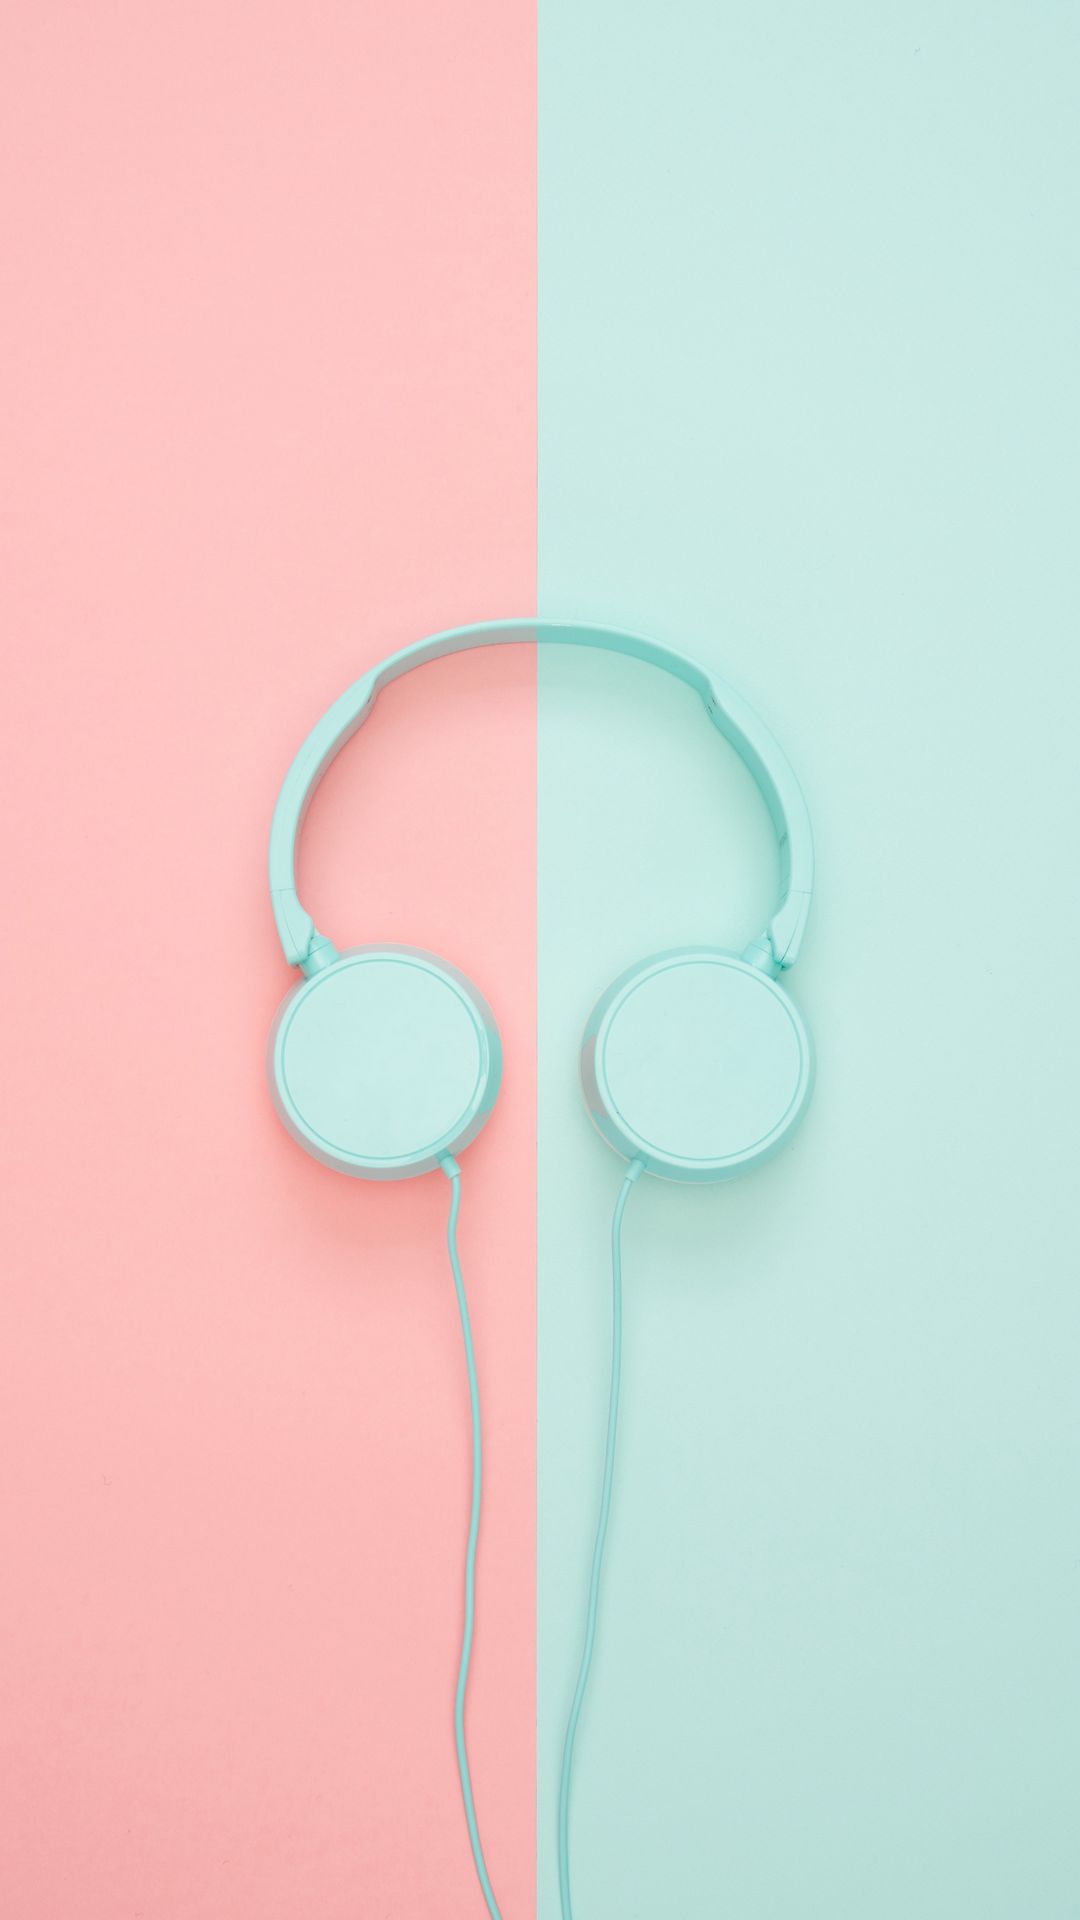 Aesthetic Headphones Wallpapers